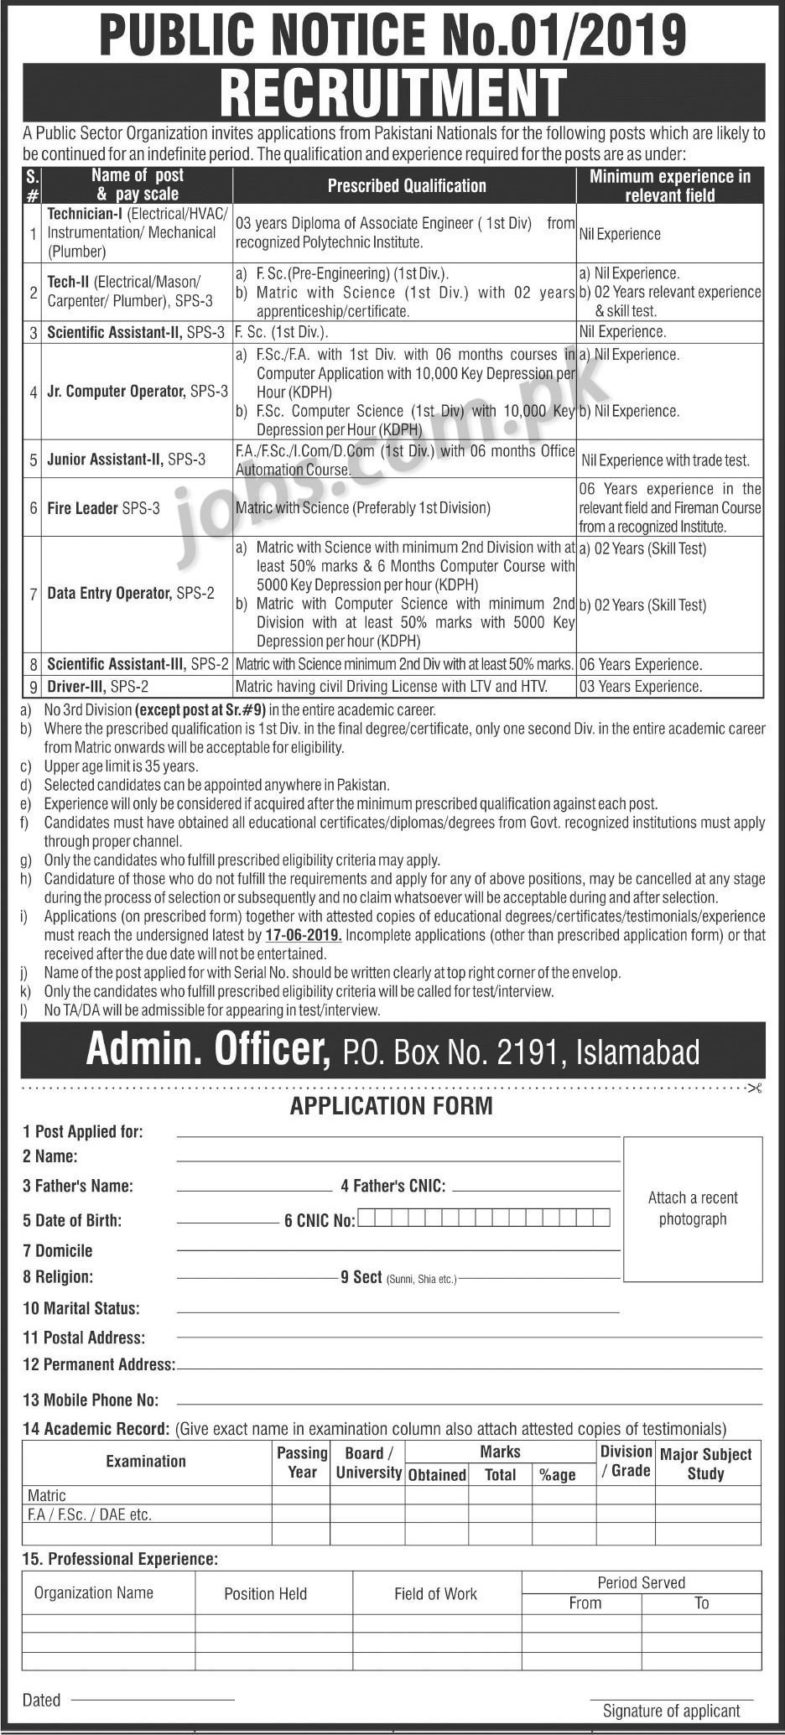 PO Box 2191 Islamabad Jobs 2019 for Tech-I/II, DAE, Jr Computer Operators, DEO, Scientific Assistant-II/III & Other Posts